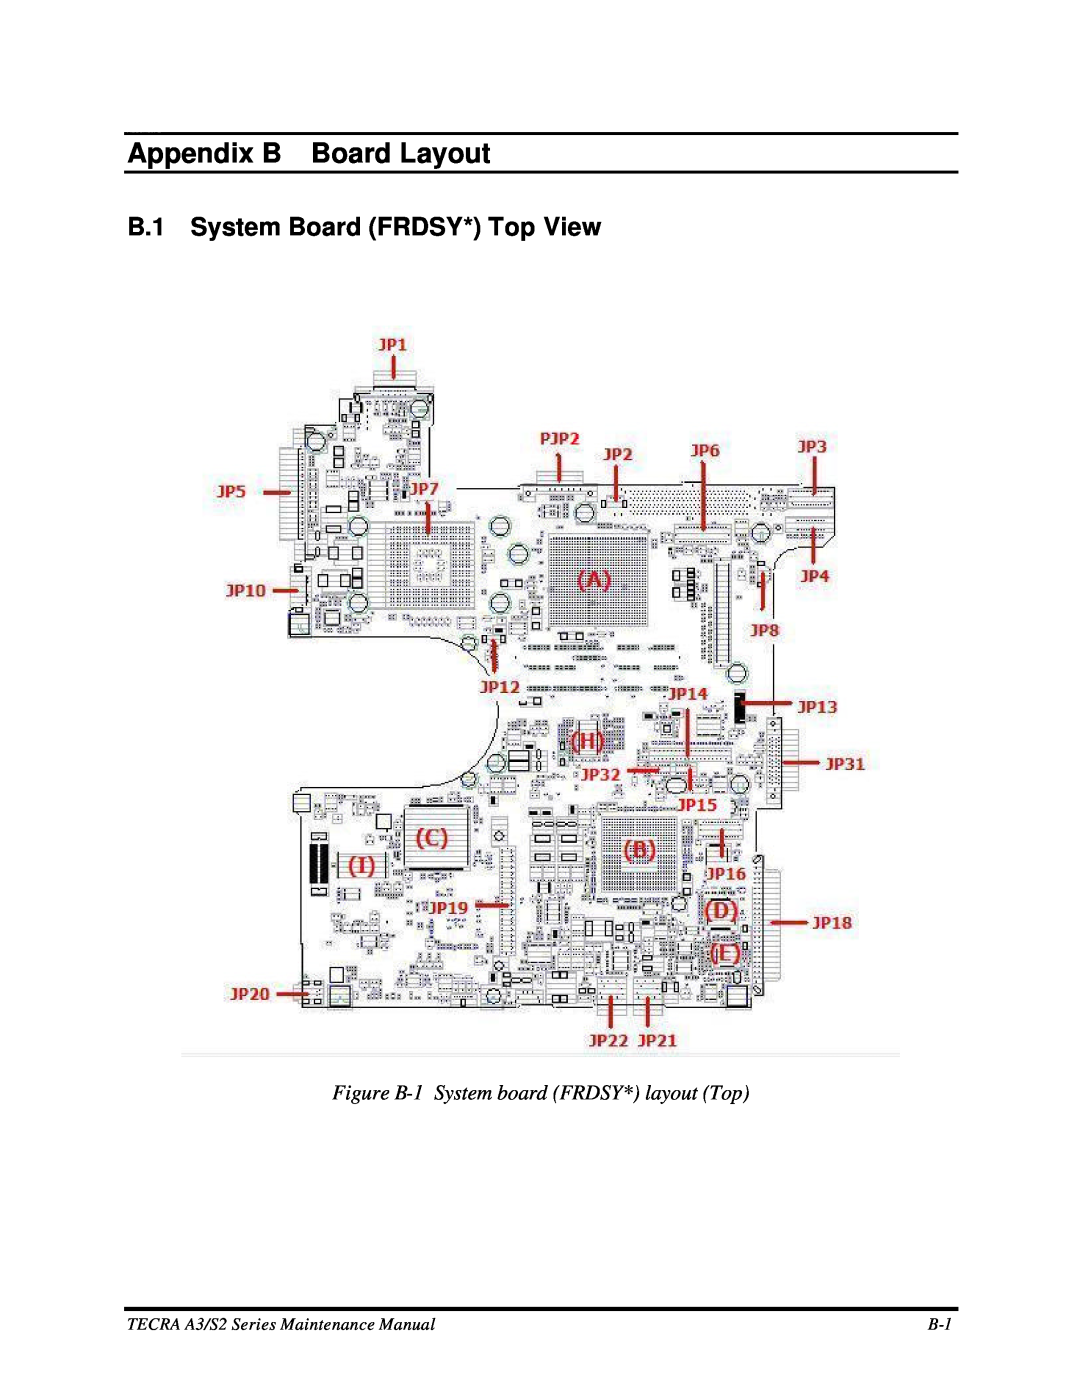 Toshiba S2 manual Appendix B Board Layout, B.1 System Board FRDSY* Top View, Figure B-1 System board FRDSY* layout Top 